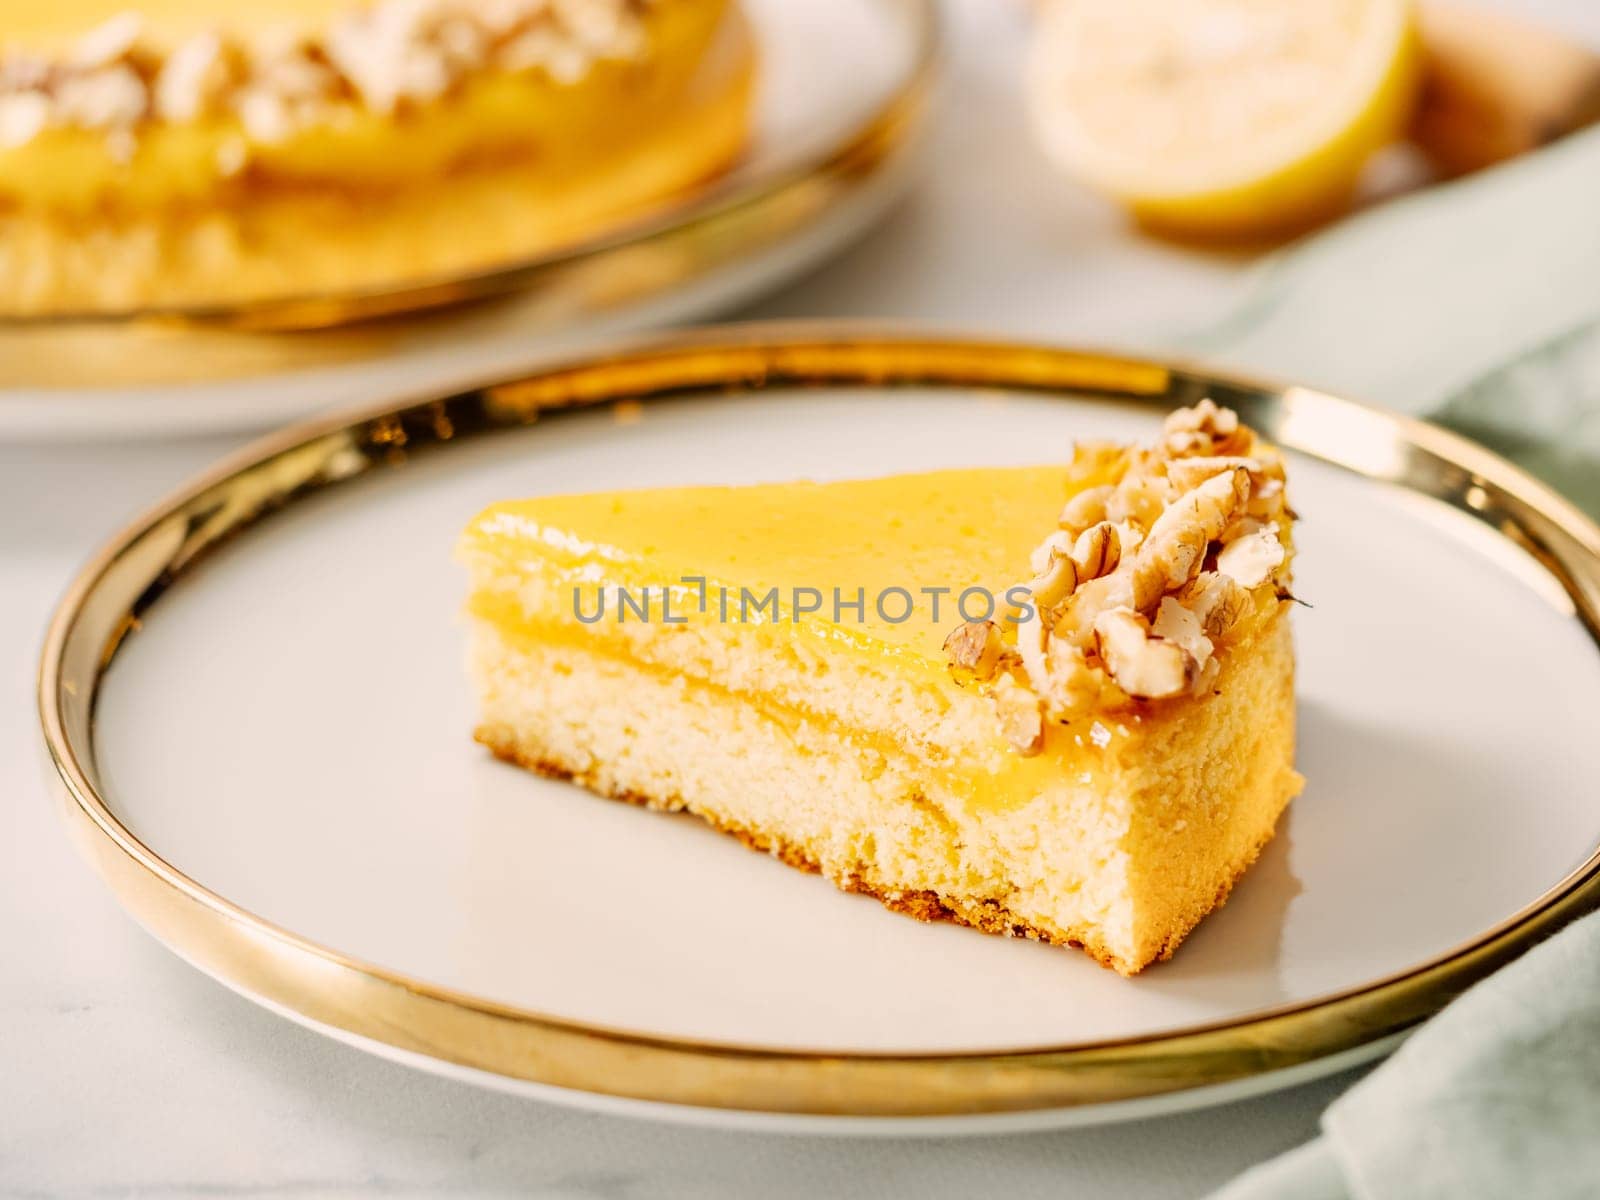 Piece of delicious lemon tart, cake or pie by fascinadora